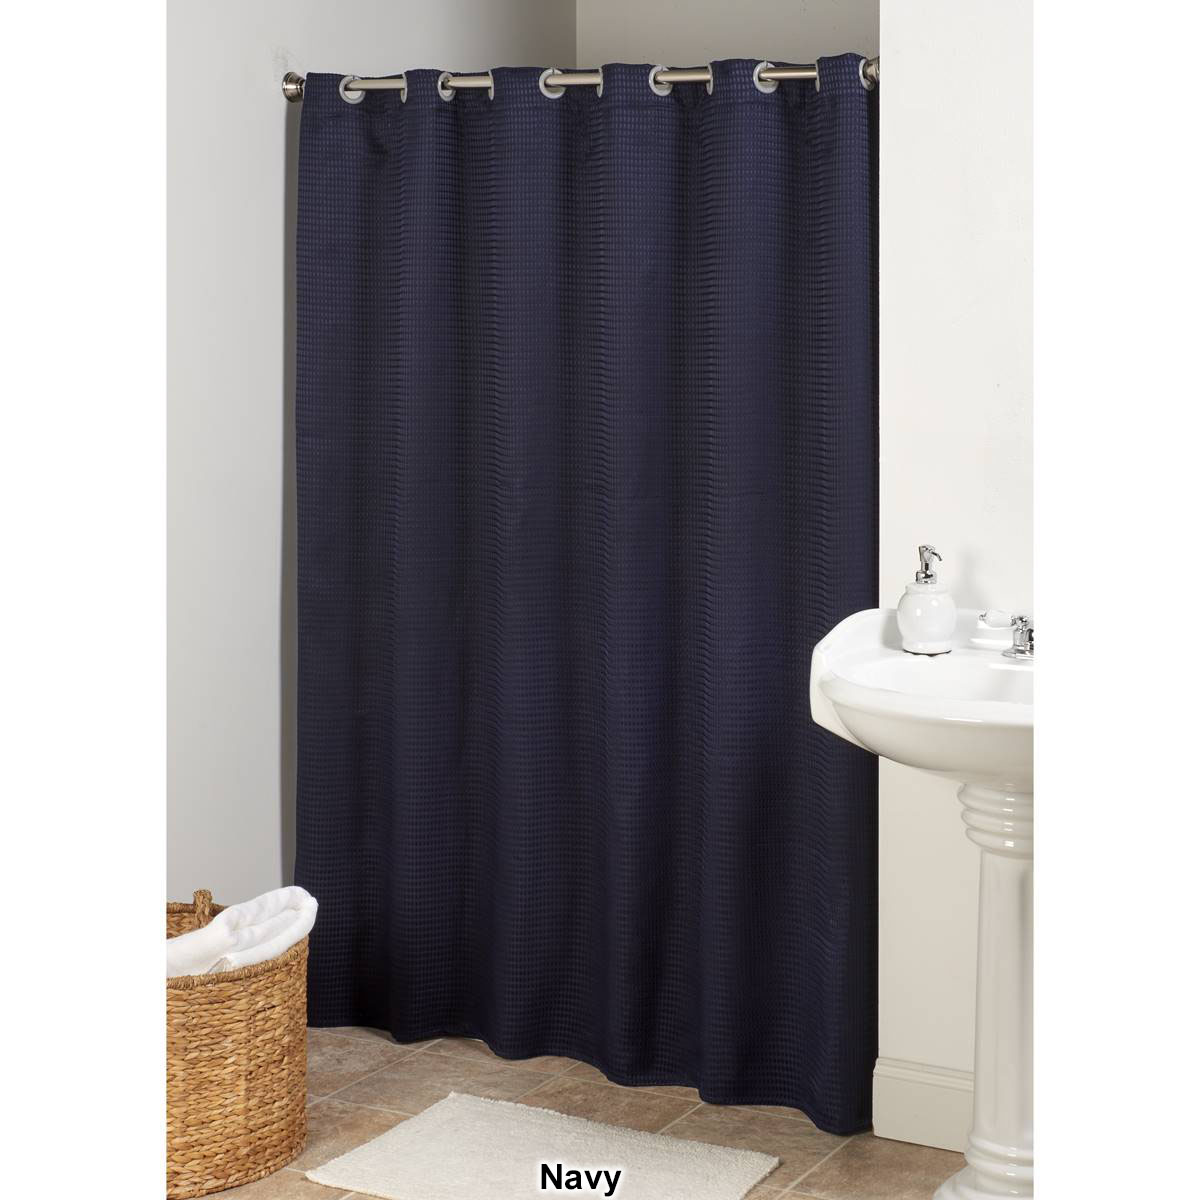 InstaCurtain Steveson Shower Curtain